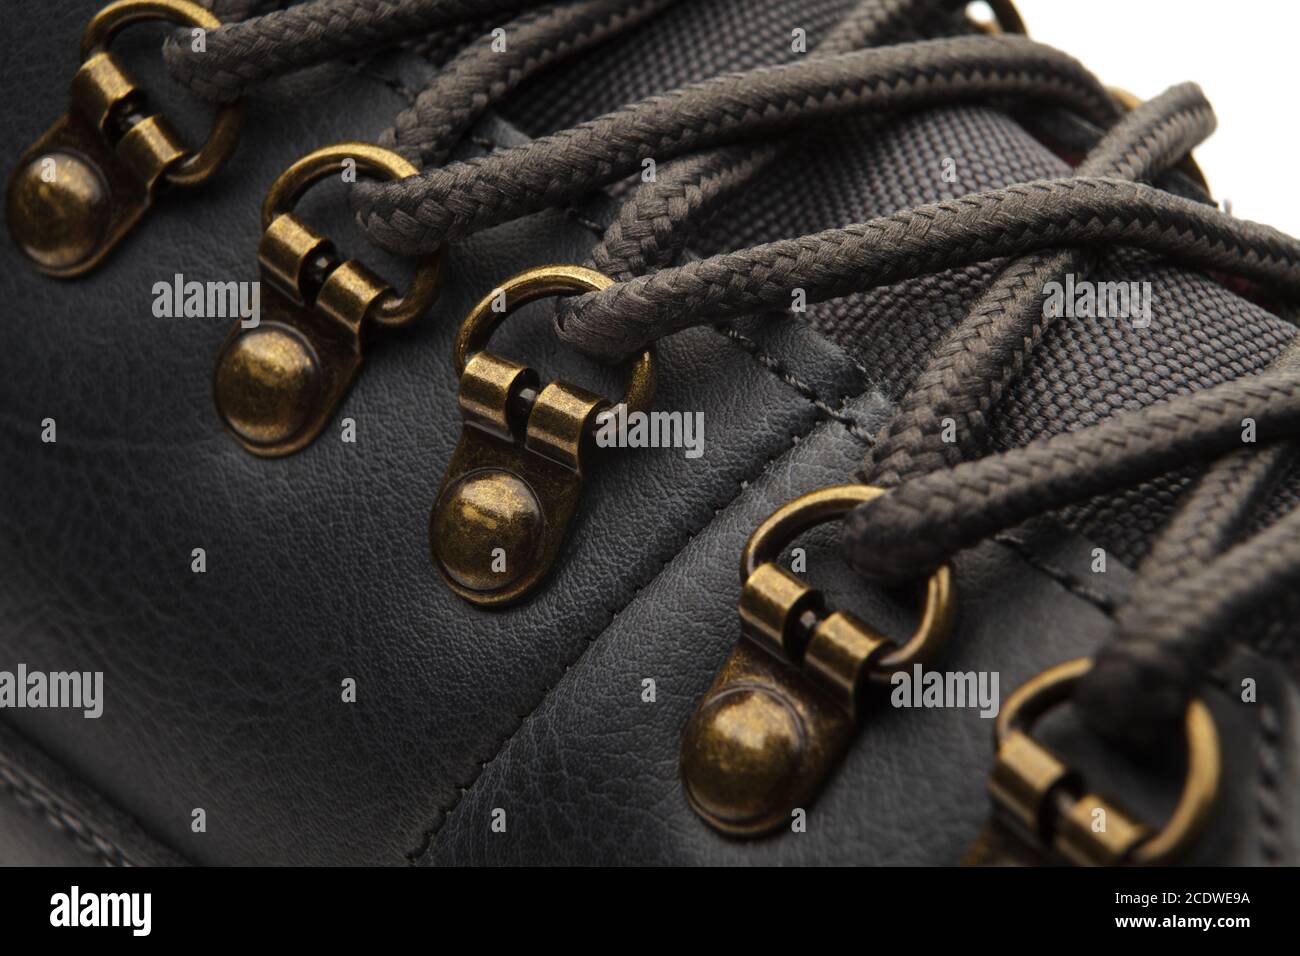 Detail shot of fragmrnt of new fashionable hiking mountain boot. Stock Photo